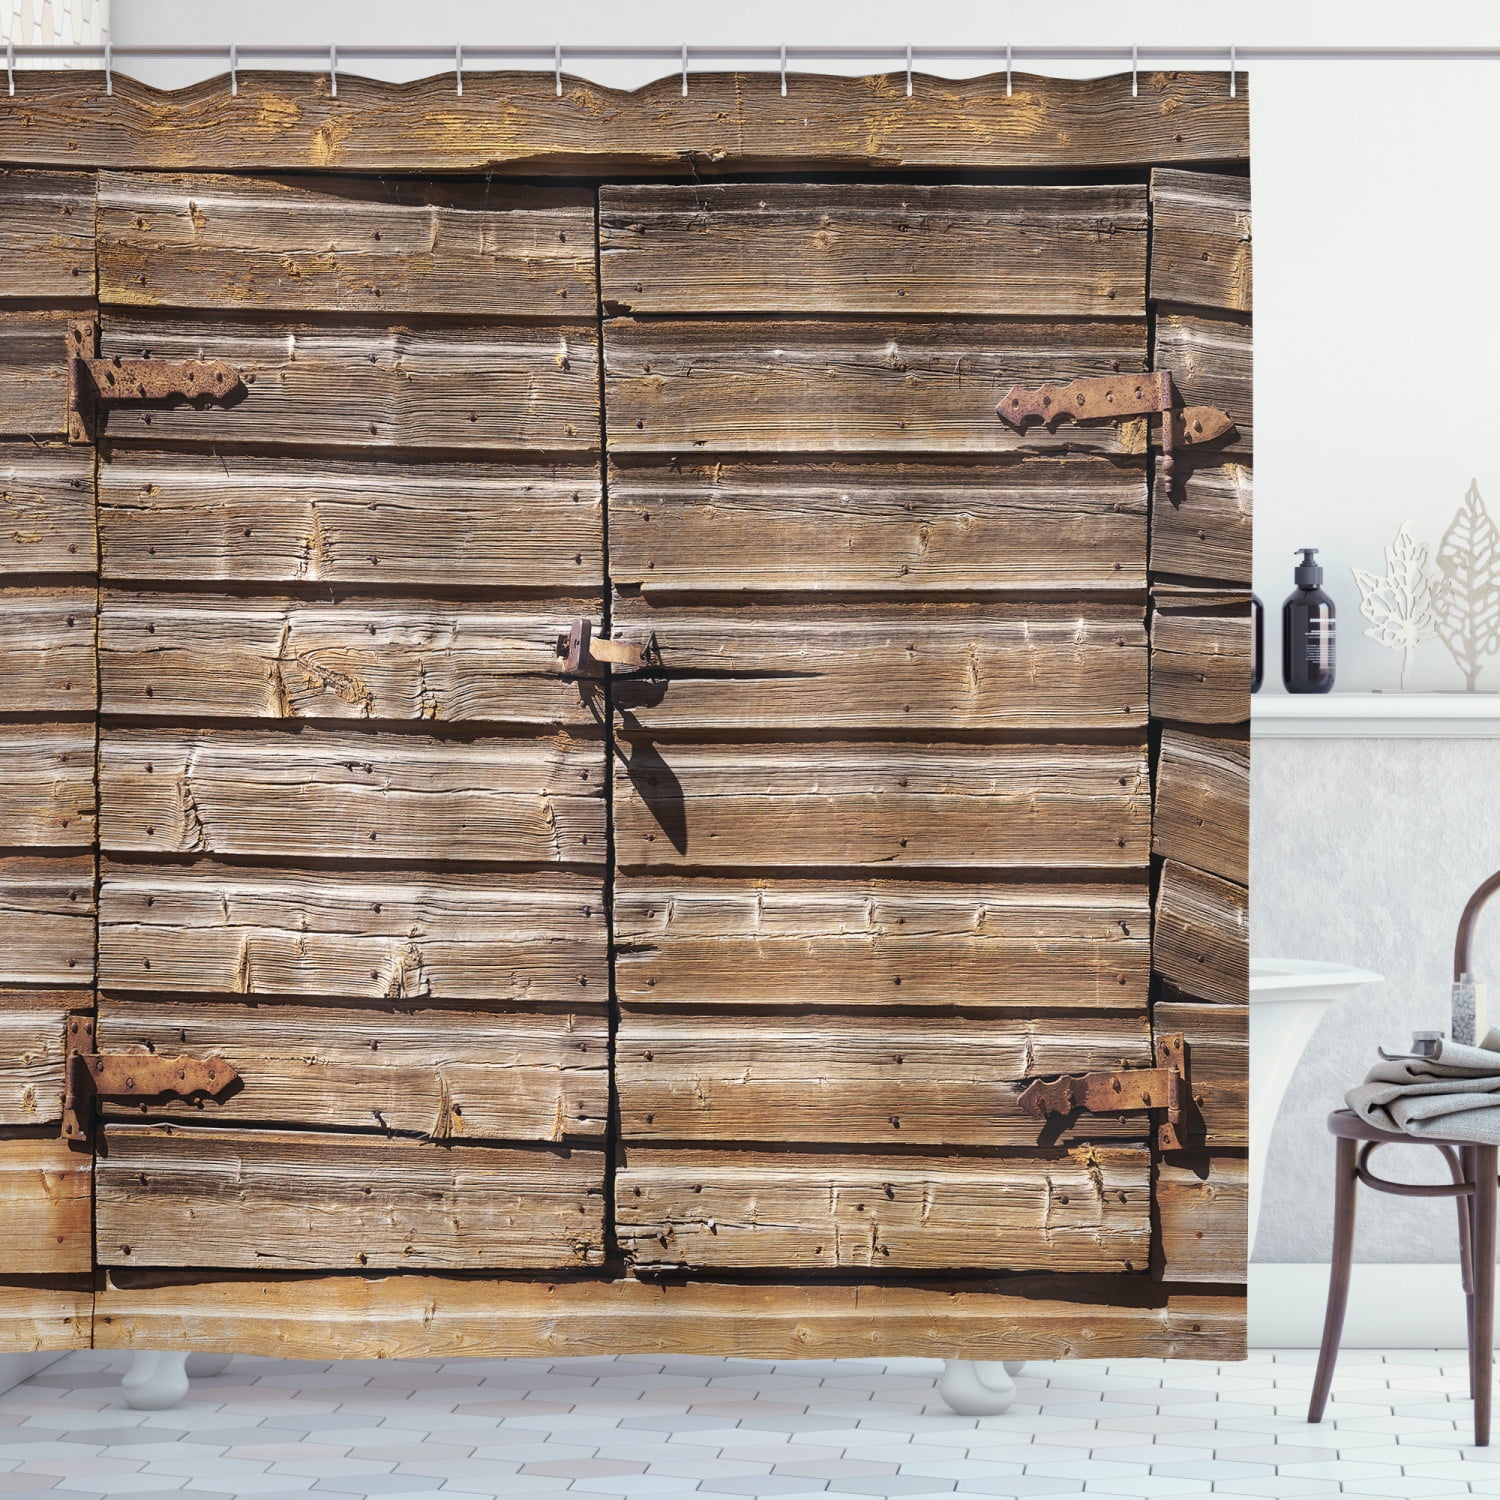 Rustic Brown-Gray Wooden Barn Door Shower Curtain Bathroom Fabric & 12hooks 